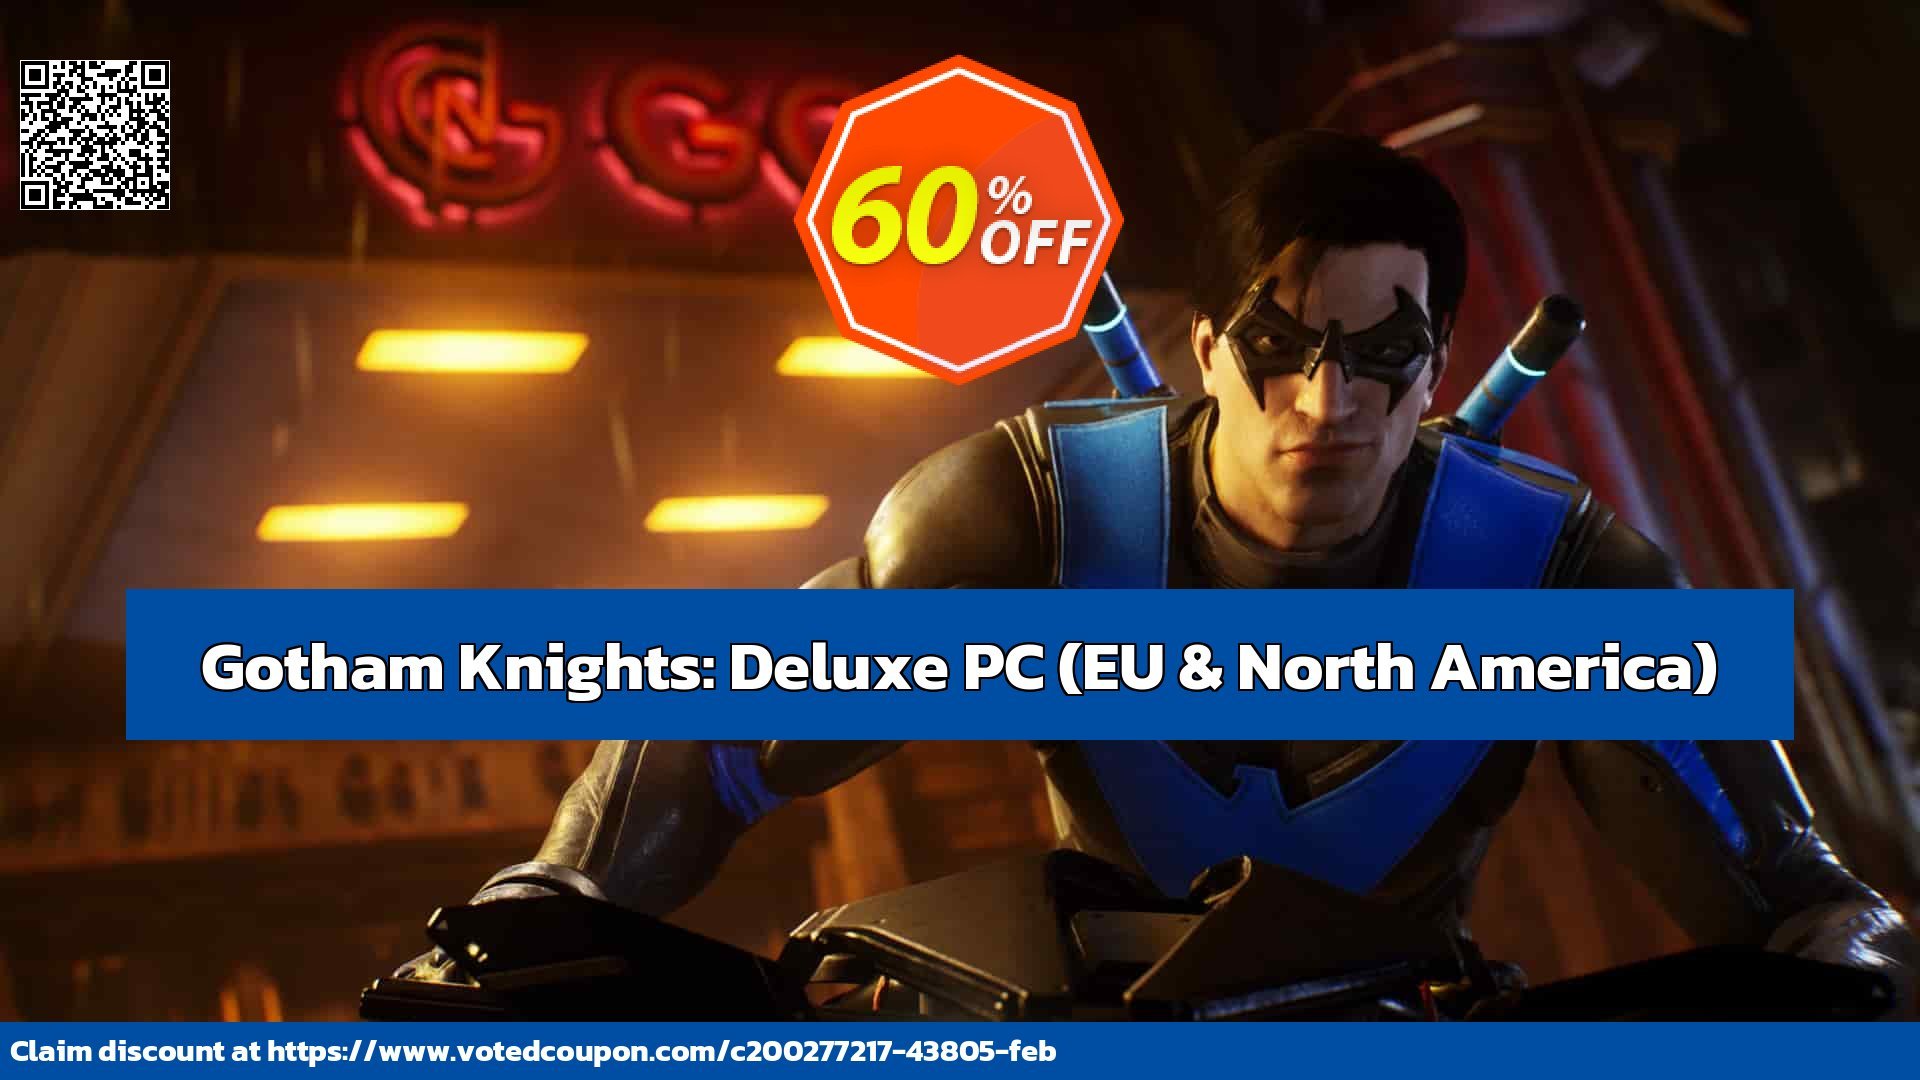 Gotham Knights: Deluxe PC, EU & North America  Coupon, discount Gotham Knights: Deluxe PC (EU & North America) Deal CDkeys. Promotion: Gotham Knights: Deluxe PC (EU & North America) Exclusive Sale offer